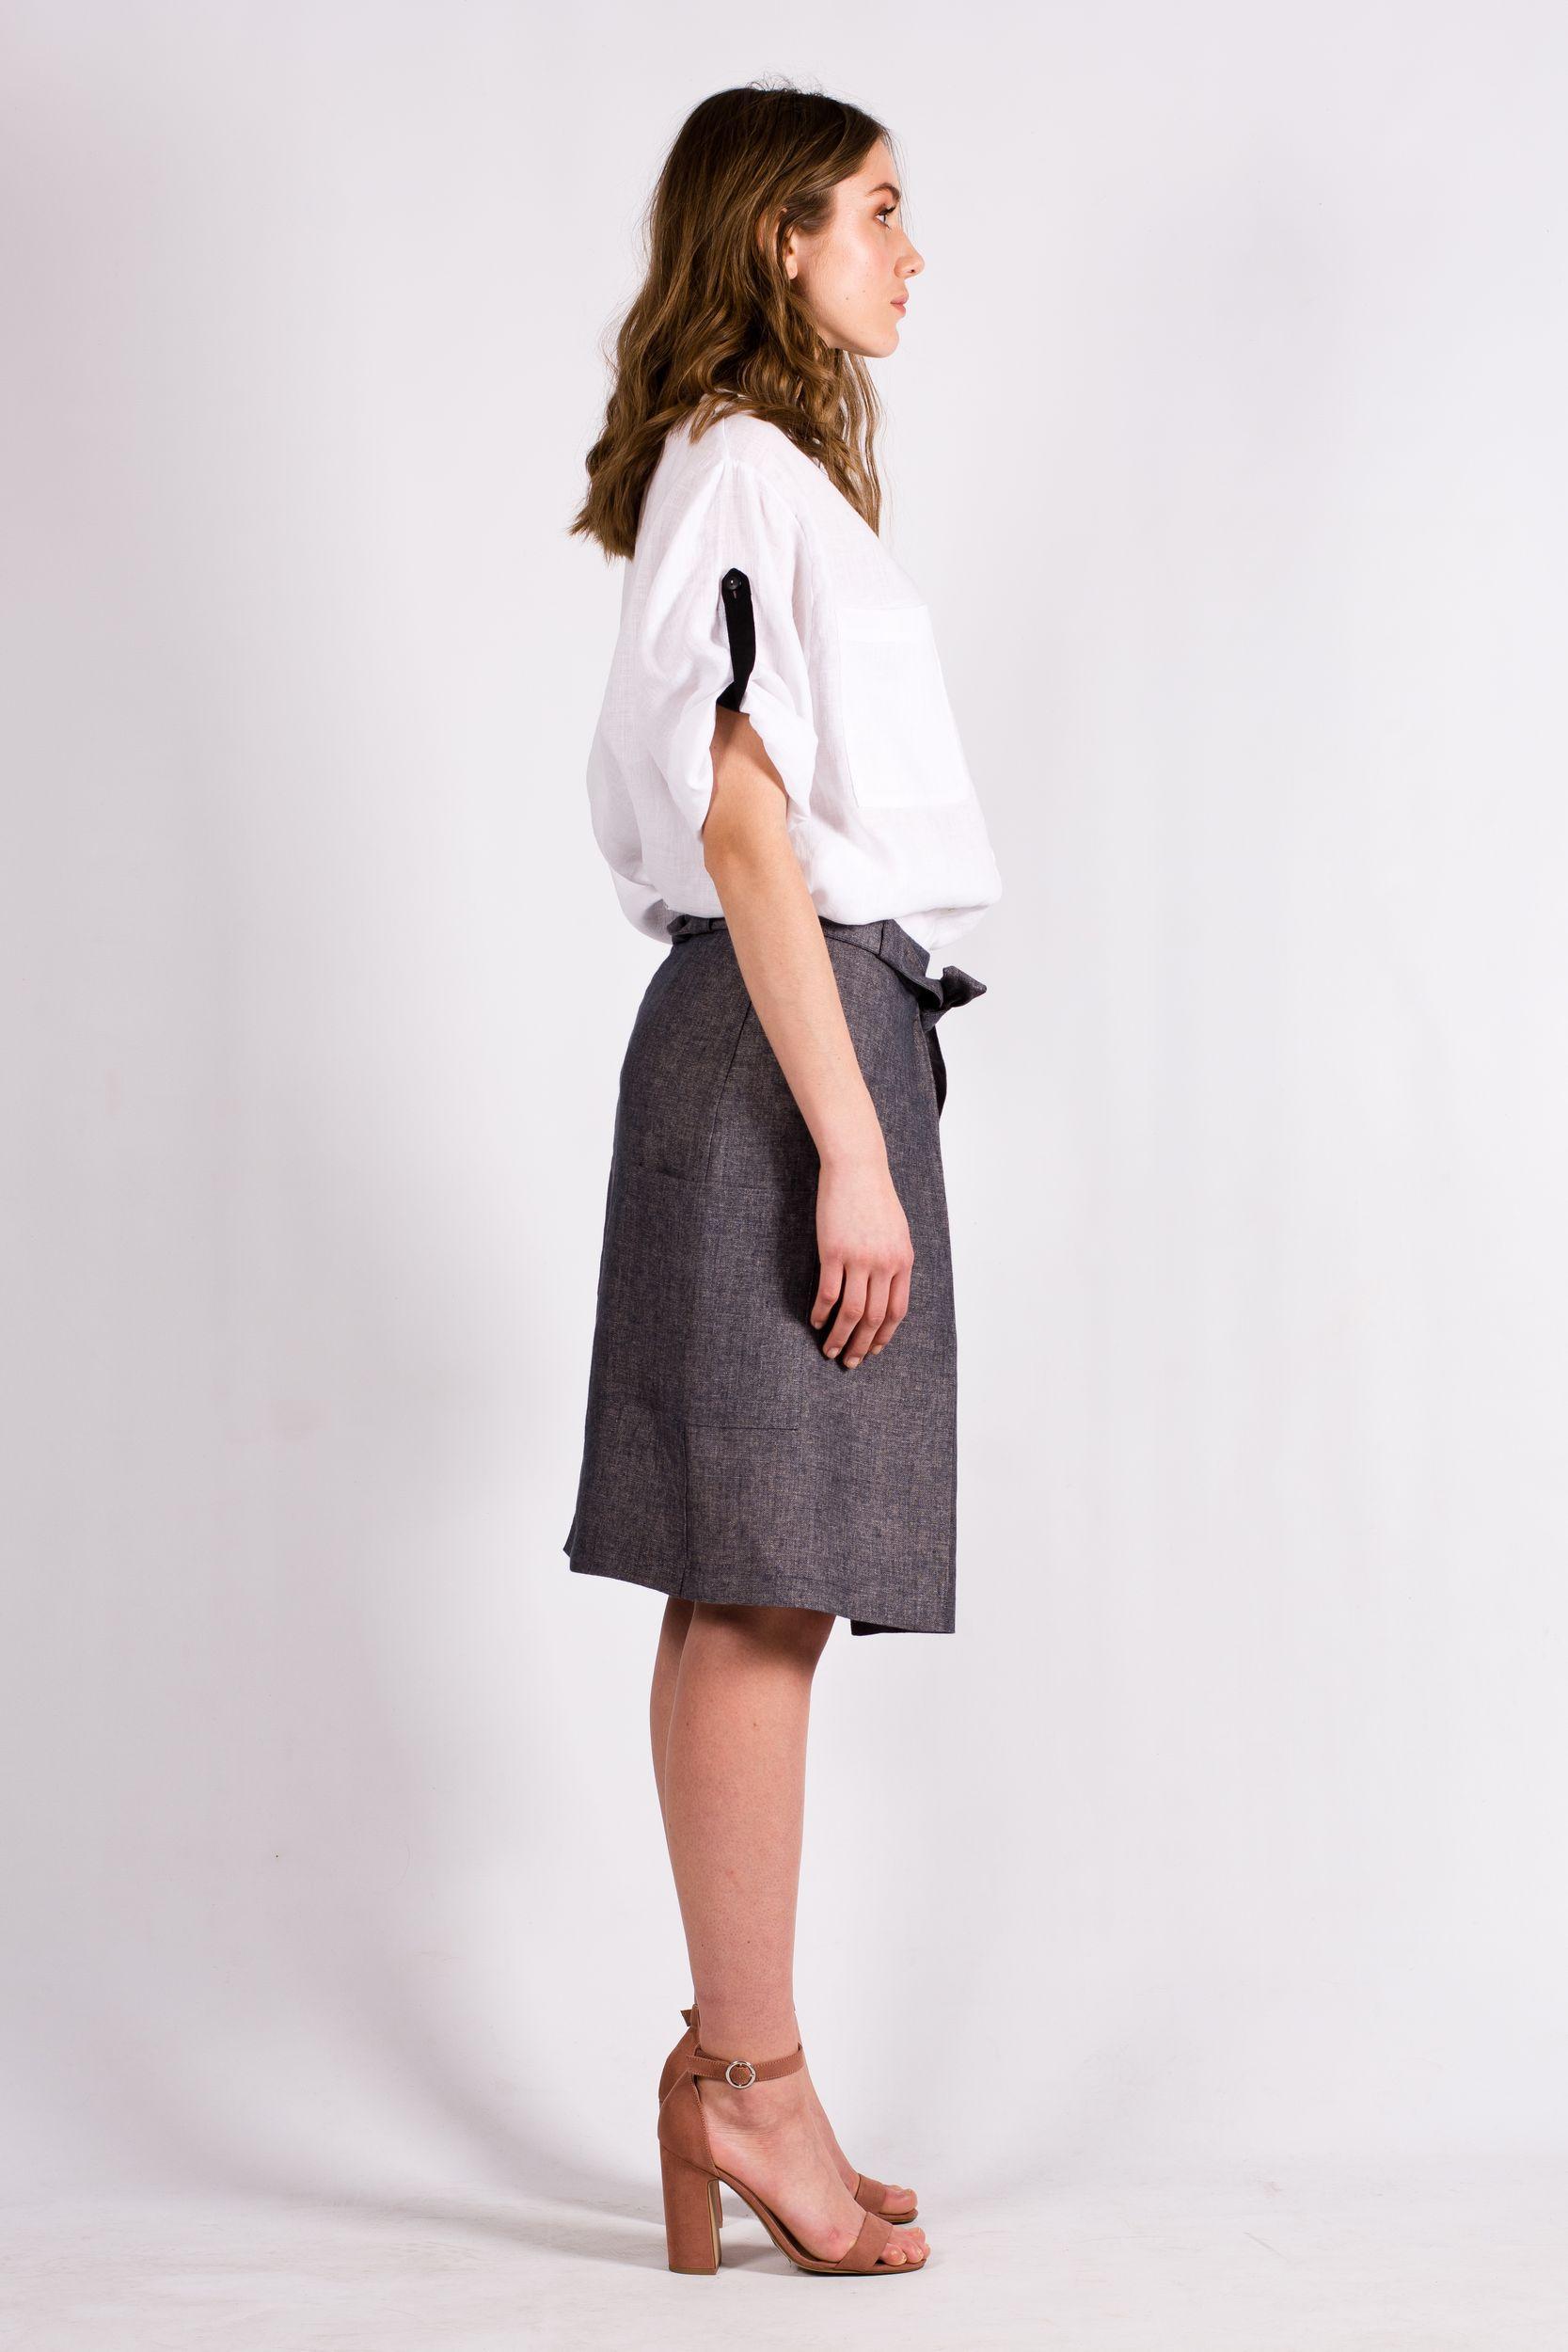 Grey linen skirt